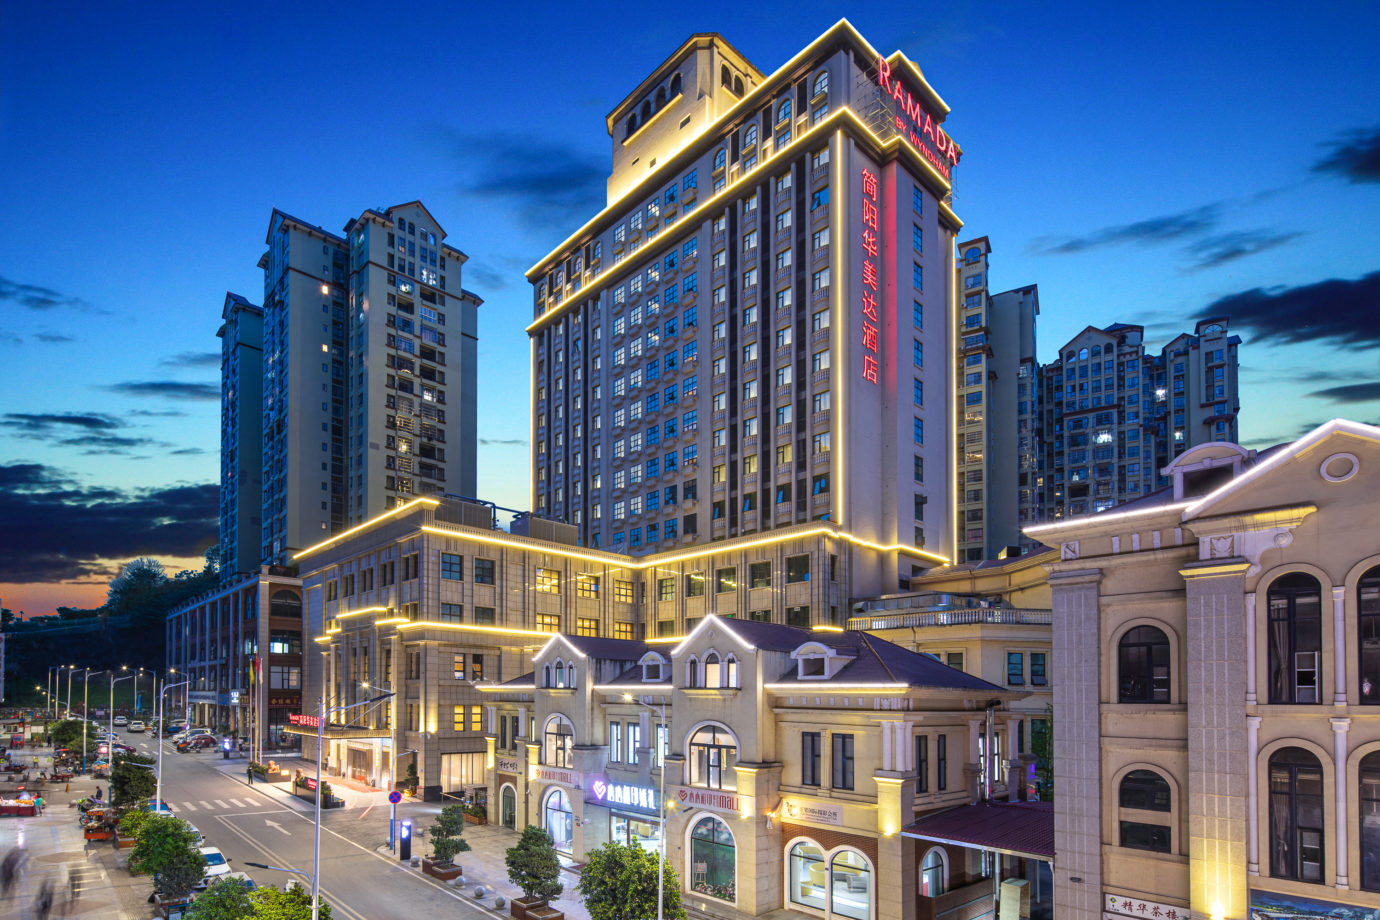 Ramada Hotels in China